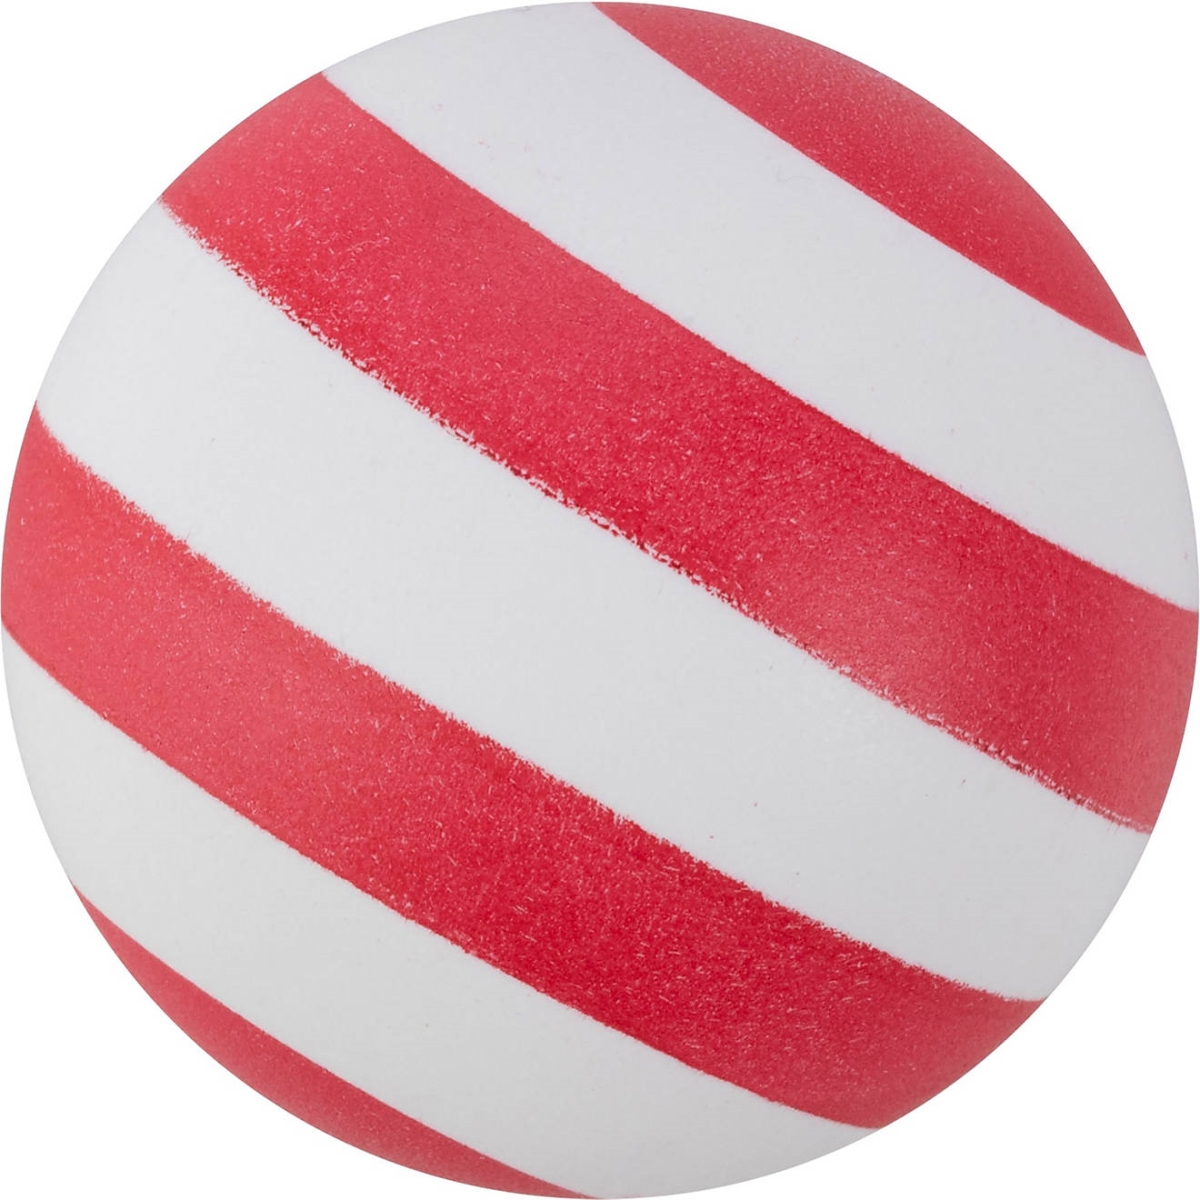 Stiga T1471 Stars & Stripes Table Tennis Balls - Pack of 6